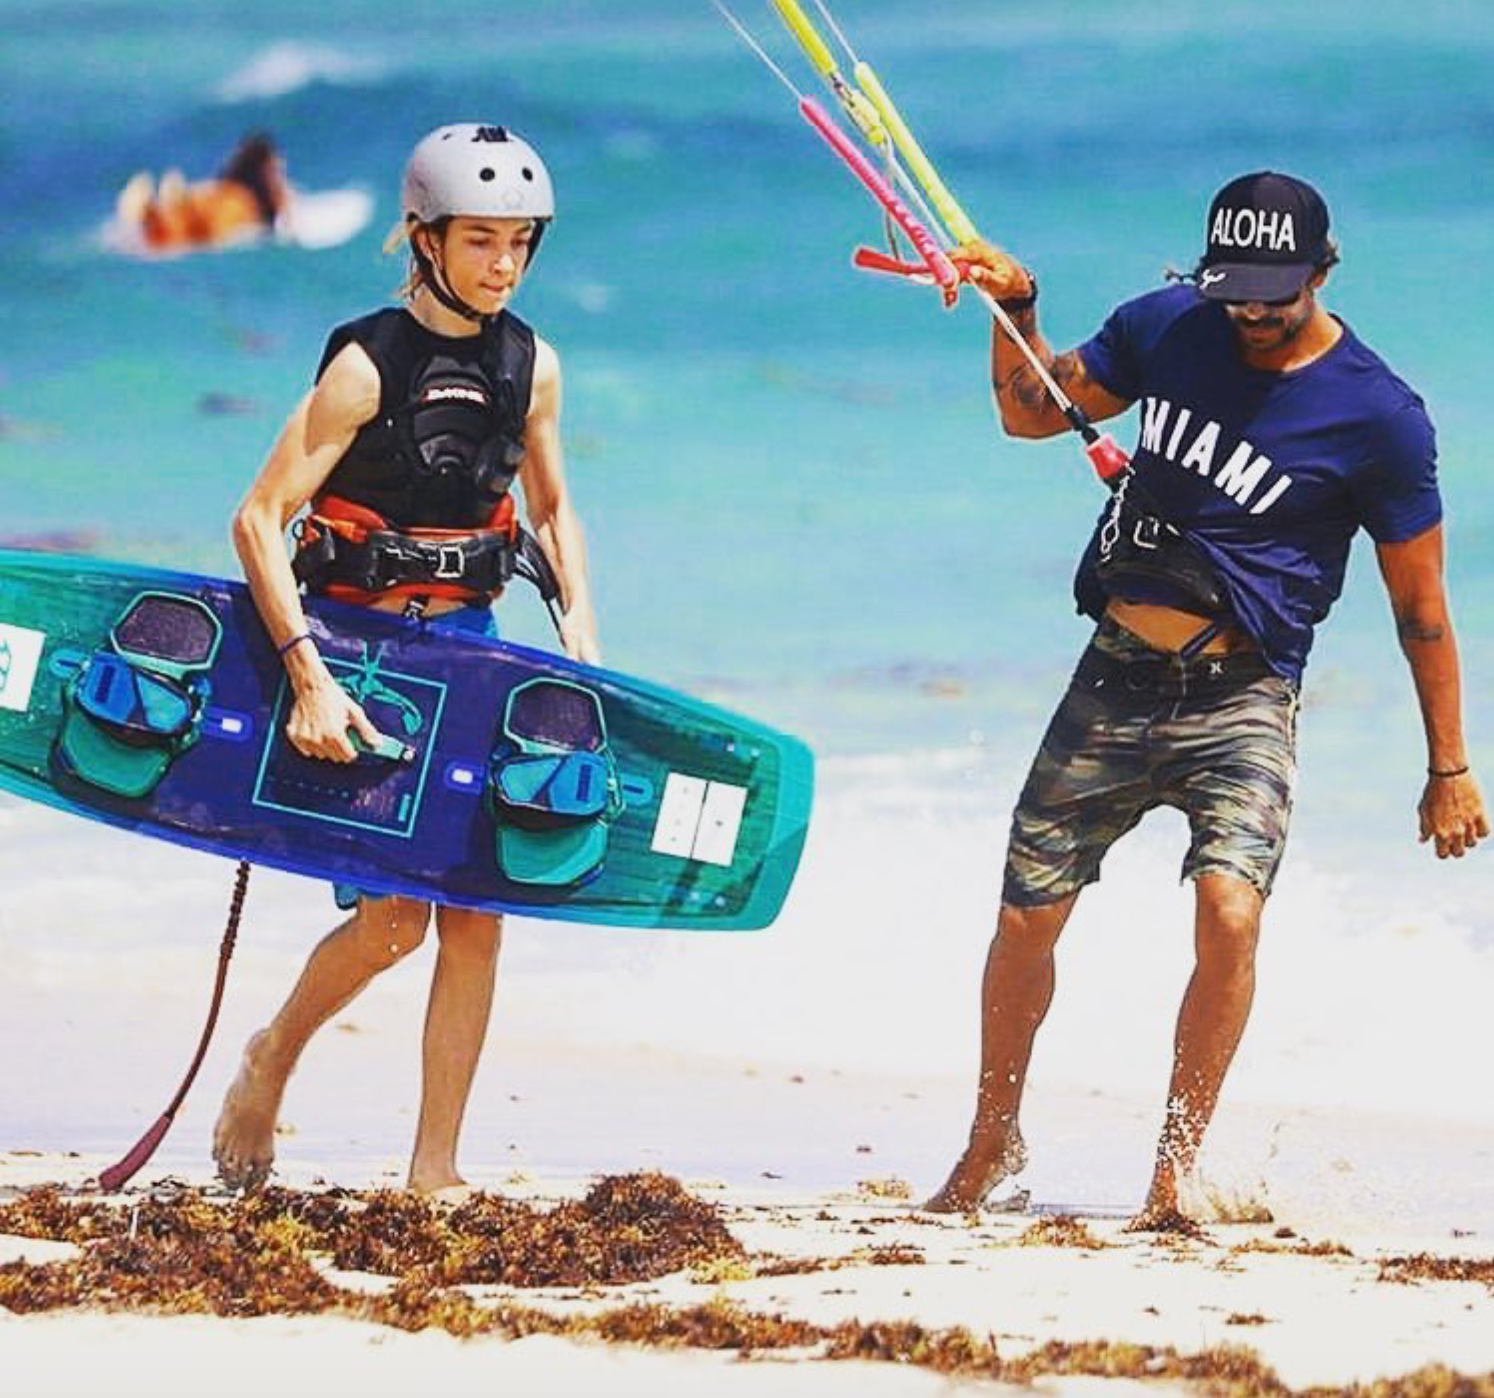 TKSMIAMI kite instructor with student walking kite on shoreline wearing safety gear 